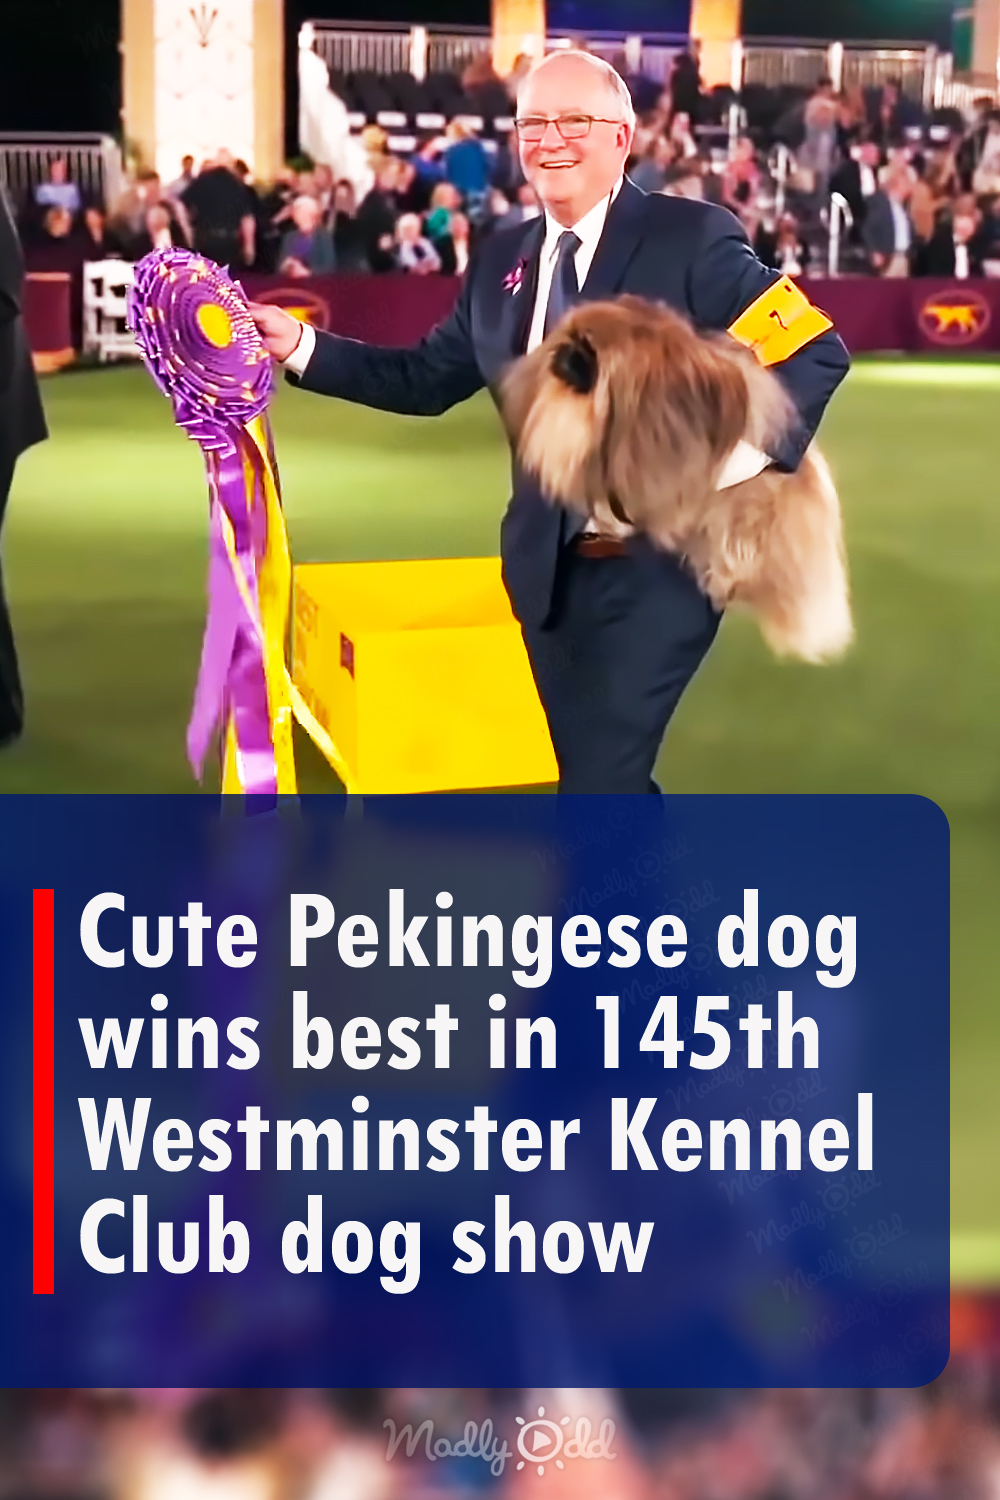 Cute Pekingese dog wins best in 145th Westminster Kennel Club dog show